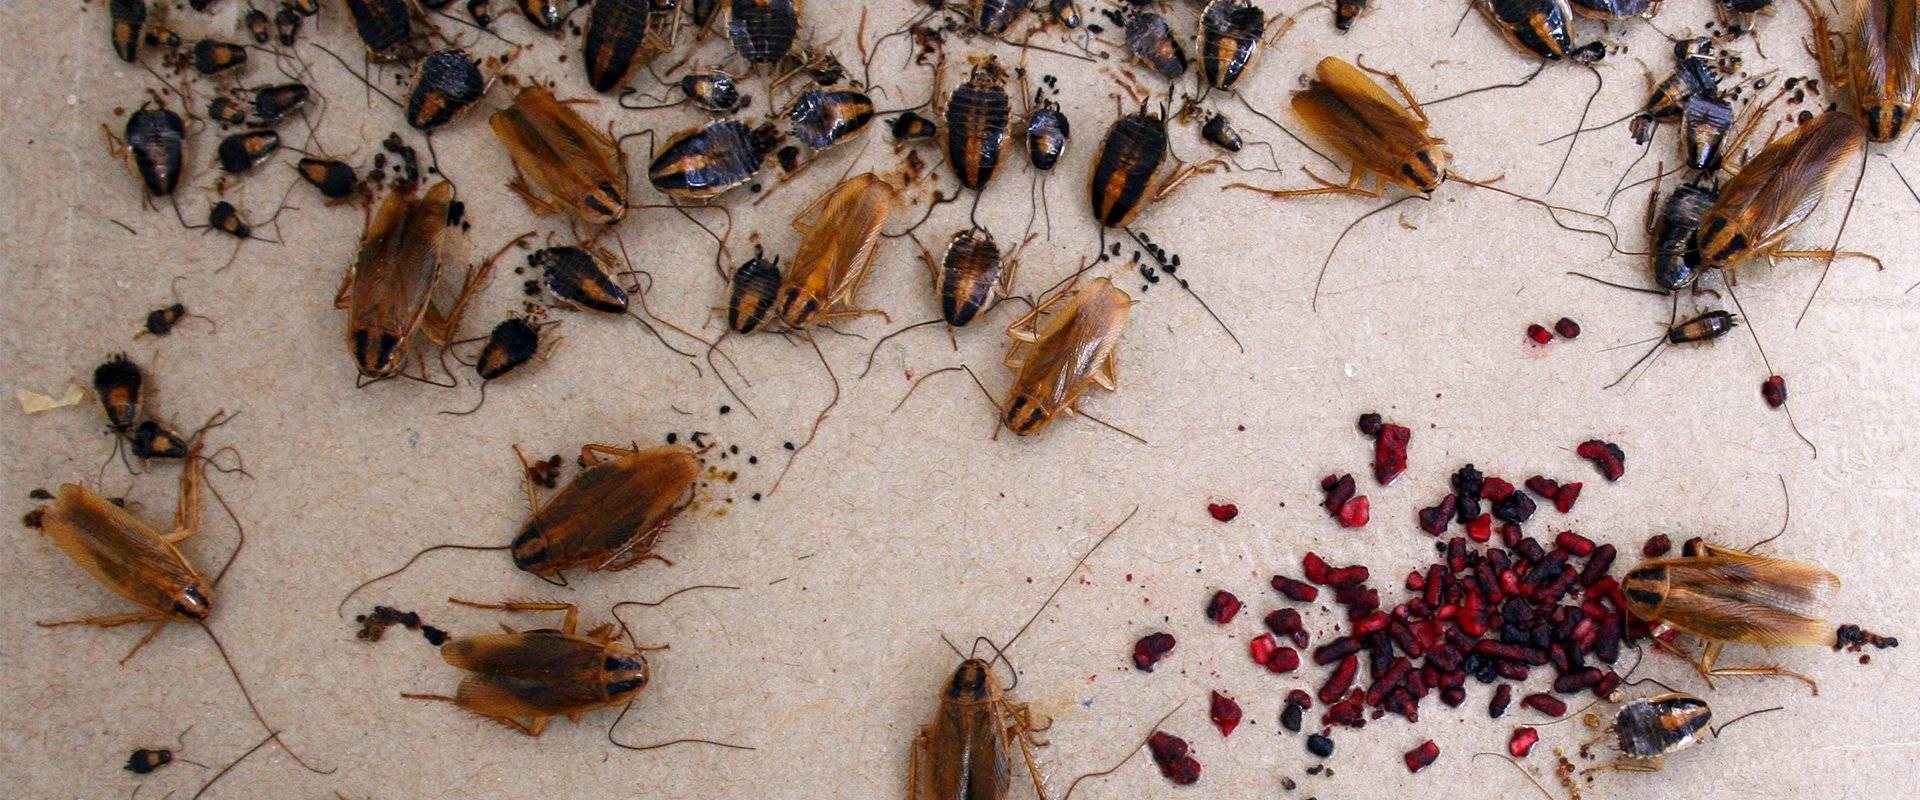 cockroaches on a sticky trap